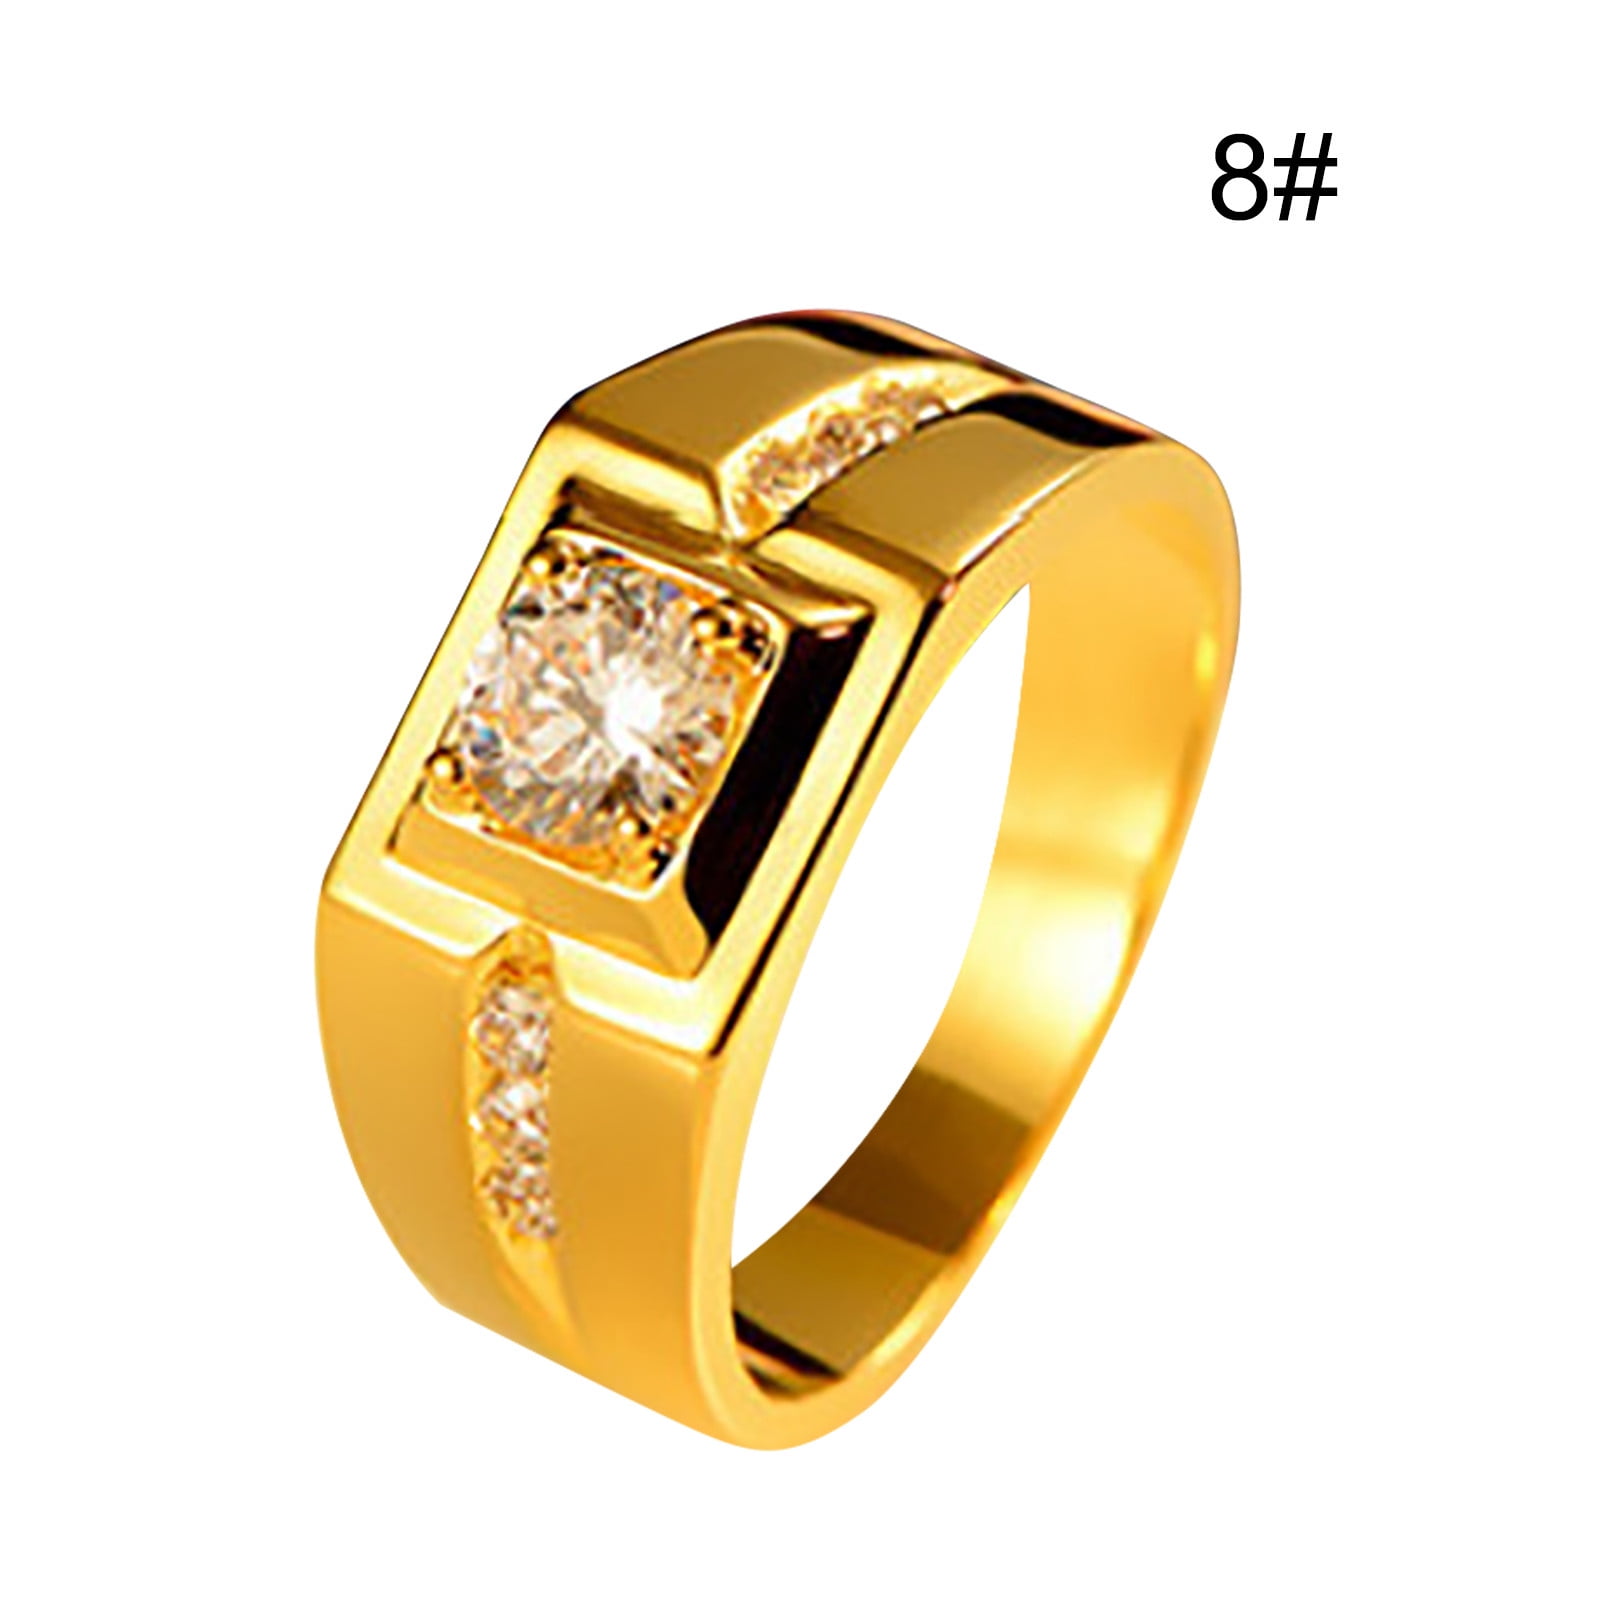 Gold Ring For Women // 24 Carat Gold Ring - YouTube